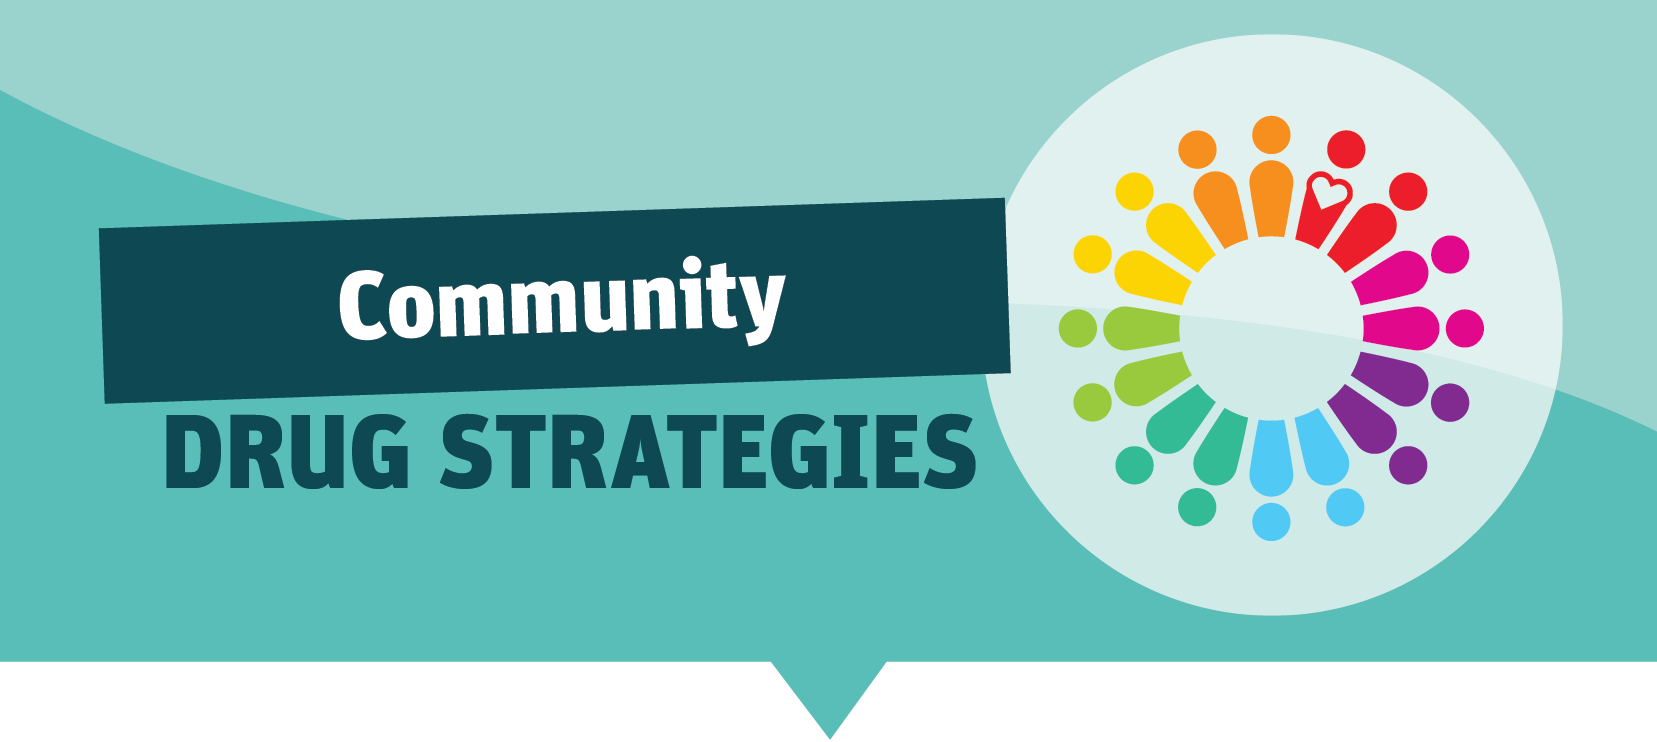 Community drug strategies